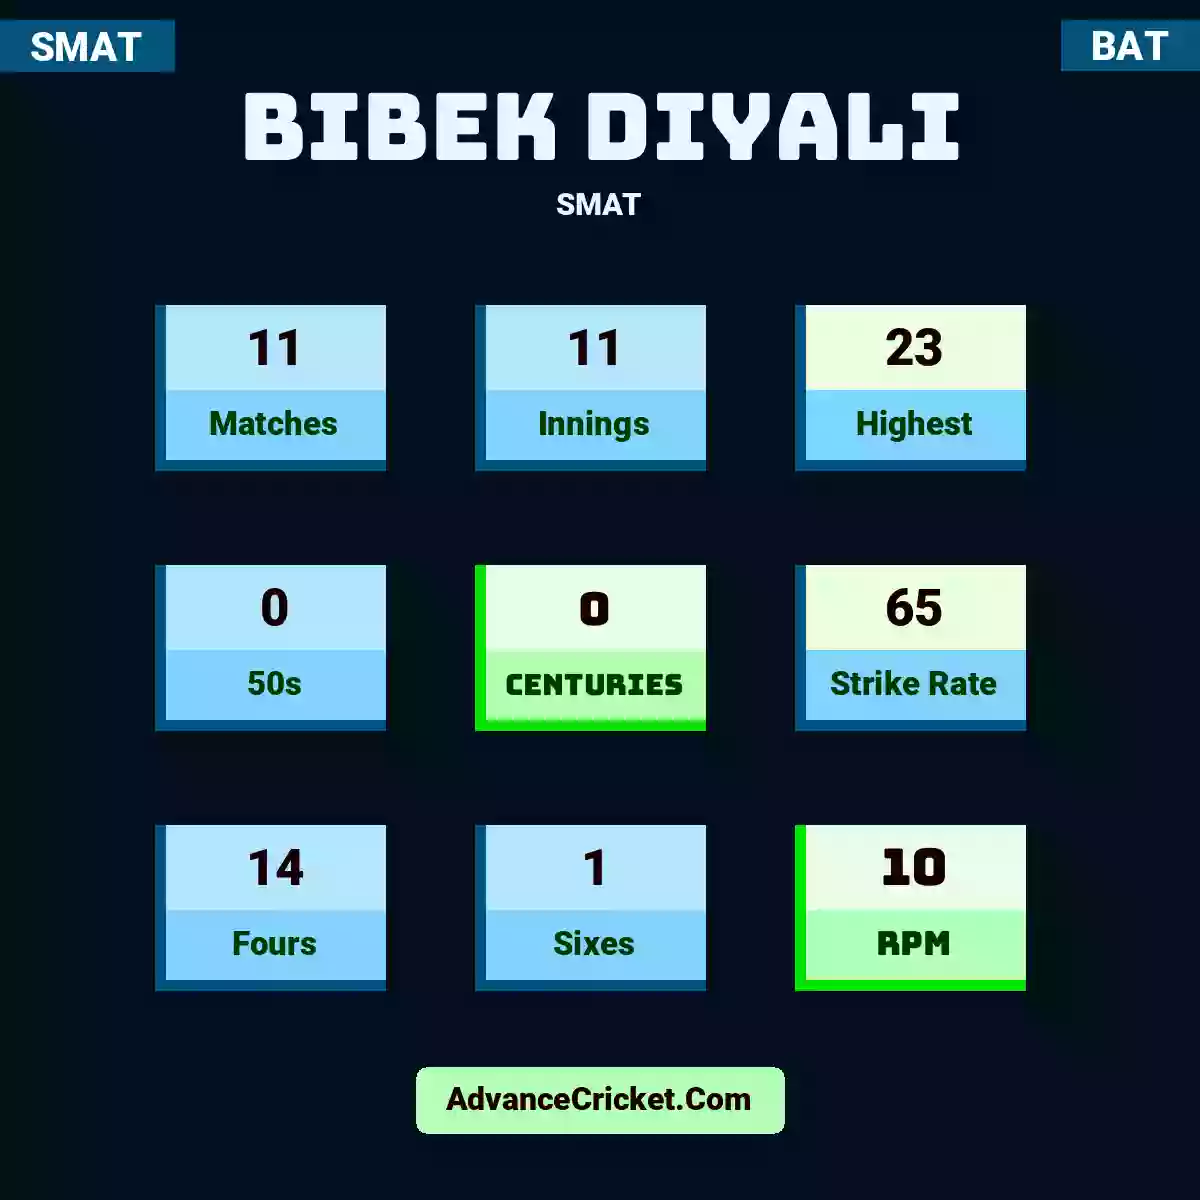 Bibek Diyali SMAT , Bibek Diyali played 11 matches, scored 23 runs as highest, 0 half-centuries, and 0 centuries, with a strike rate of 65. B.Diyali hit 14 fours and 1 sixes, with an RPM of 10.